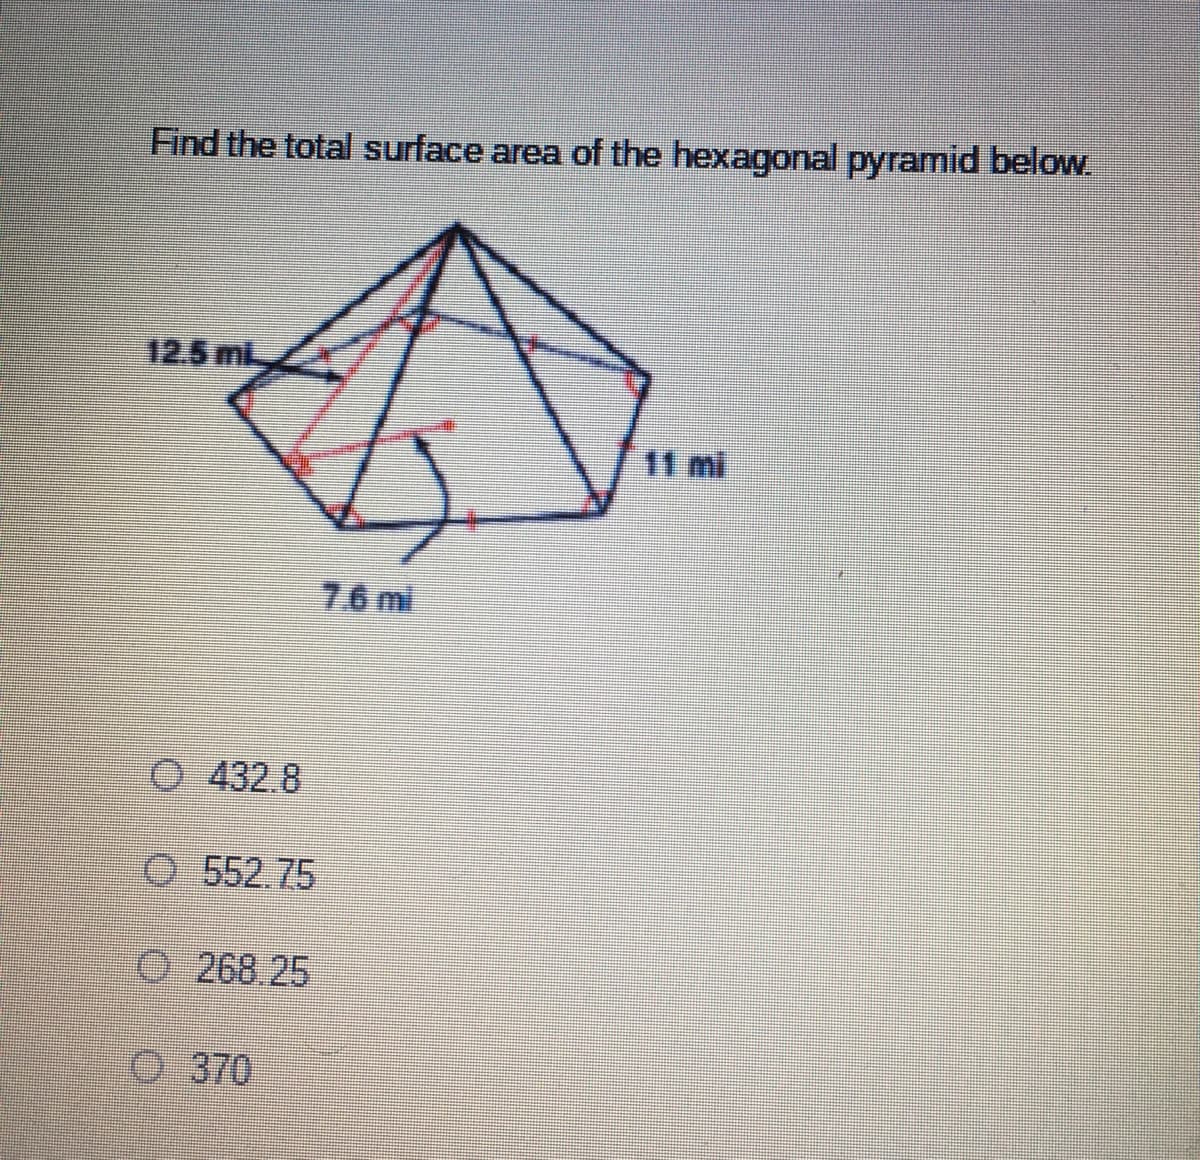 Find the total surface area of the hexagonal pyramid below.
12.5 ml
11 mi
7.6 mi
O 432.8
O 552.75
O 268.25
O 370
